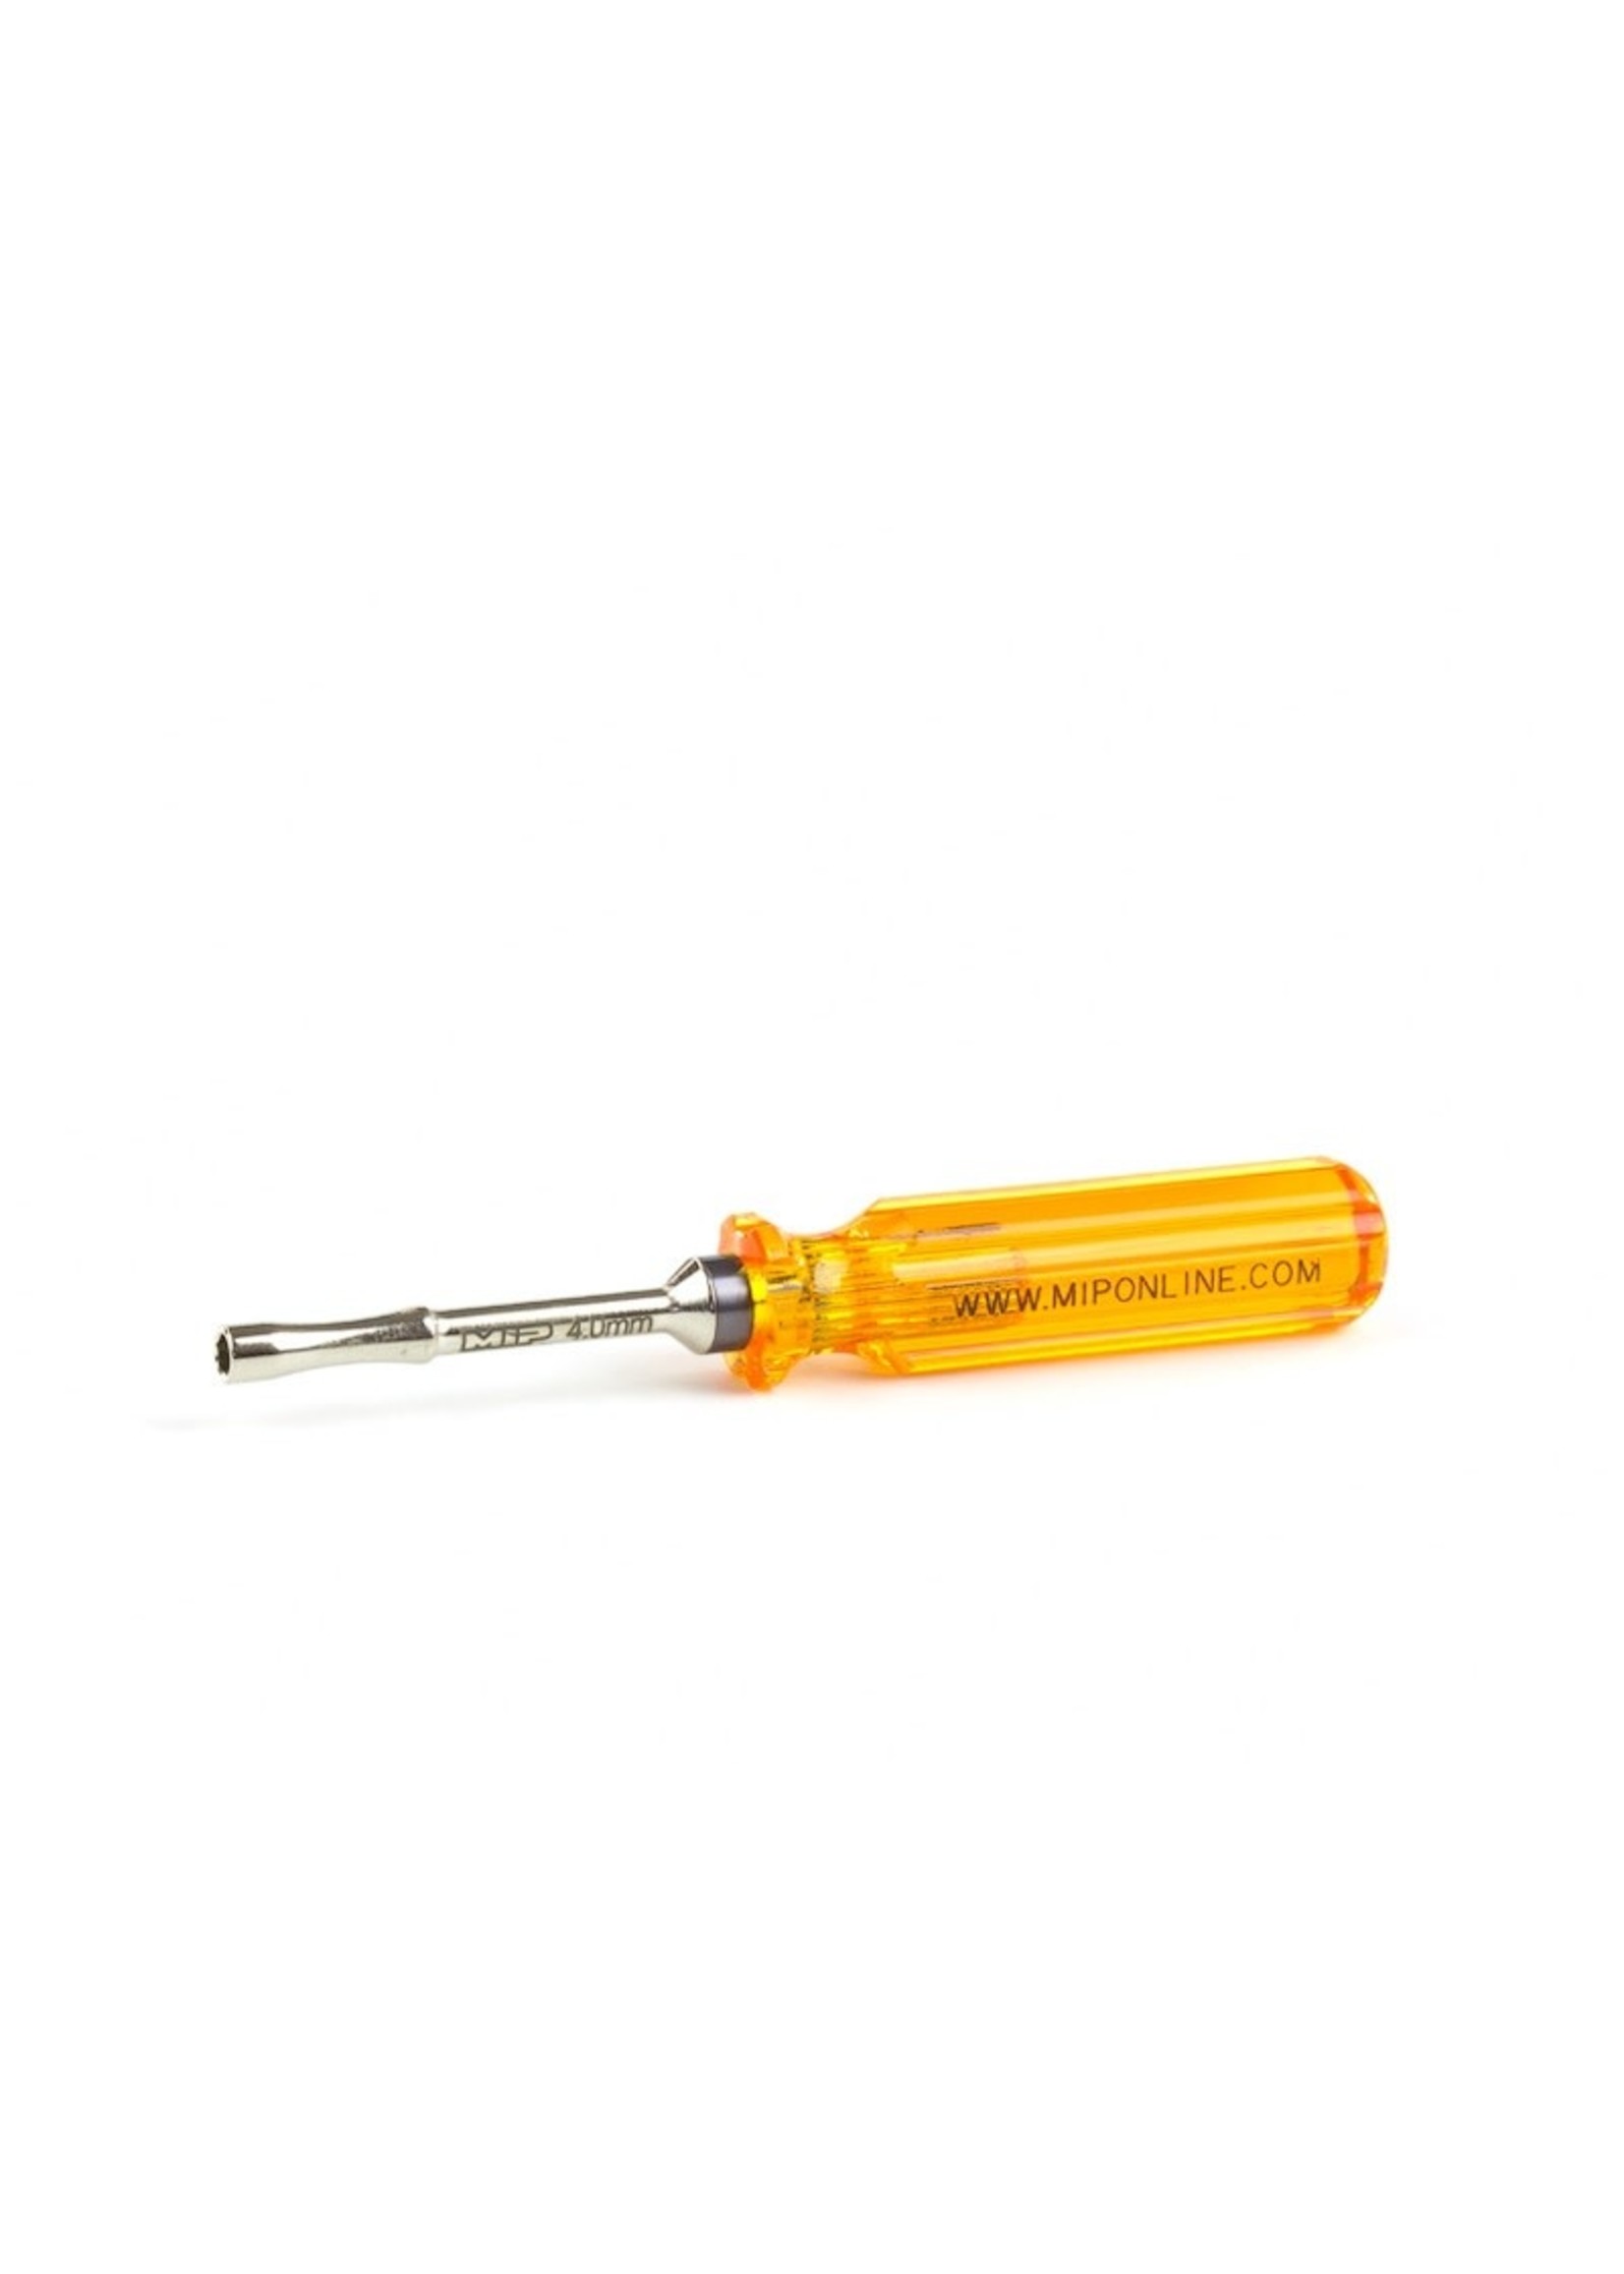 MIP MIP9701 MIP Nut Driver Wrench, 4.0mm